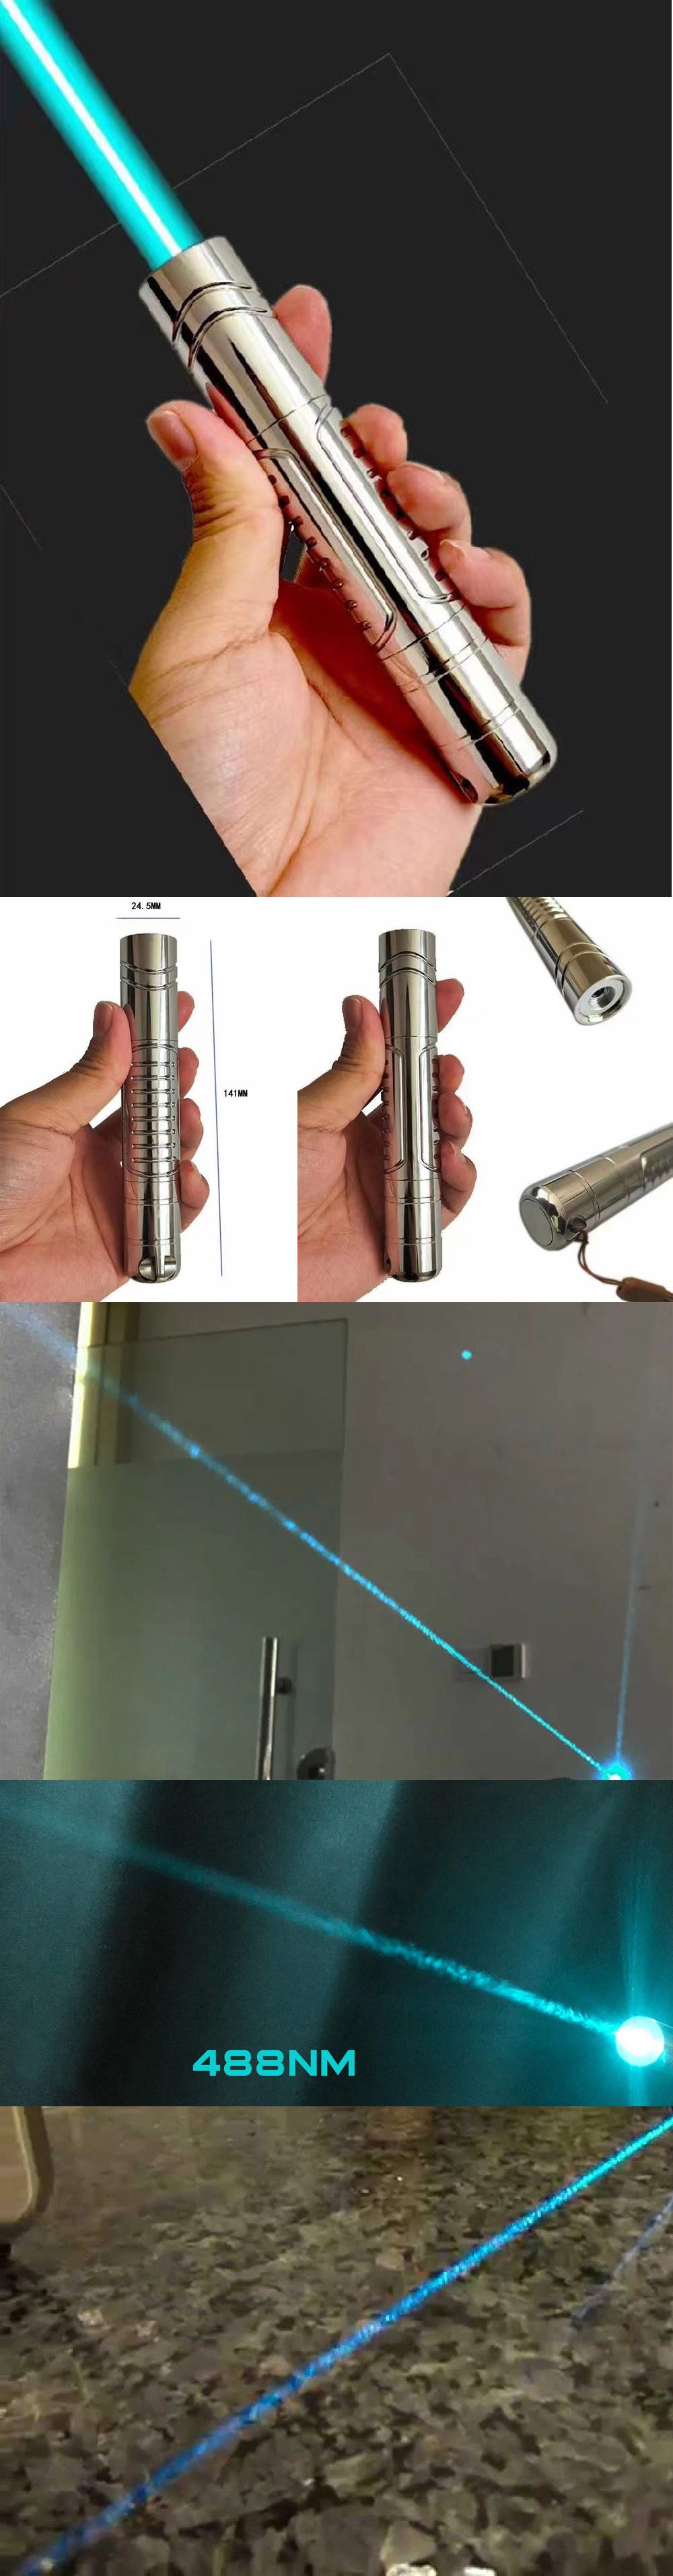 Puntatore laser ciano 488 nm